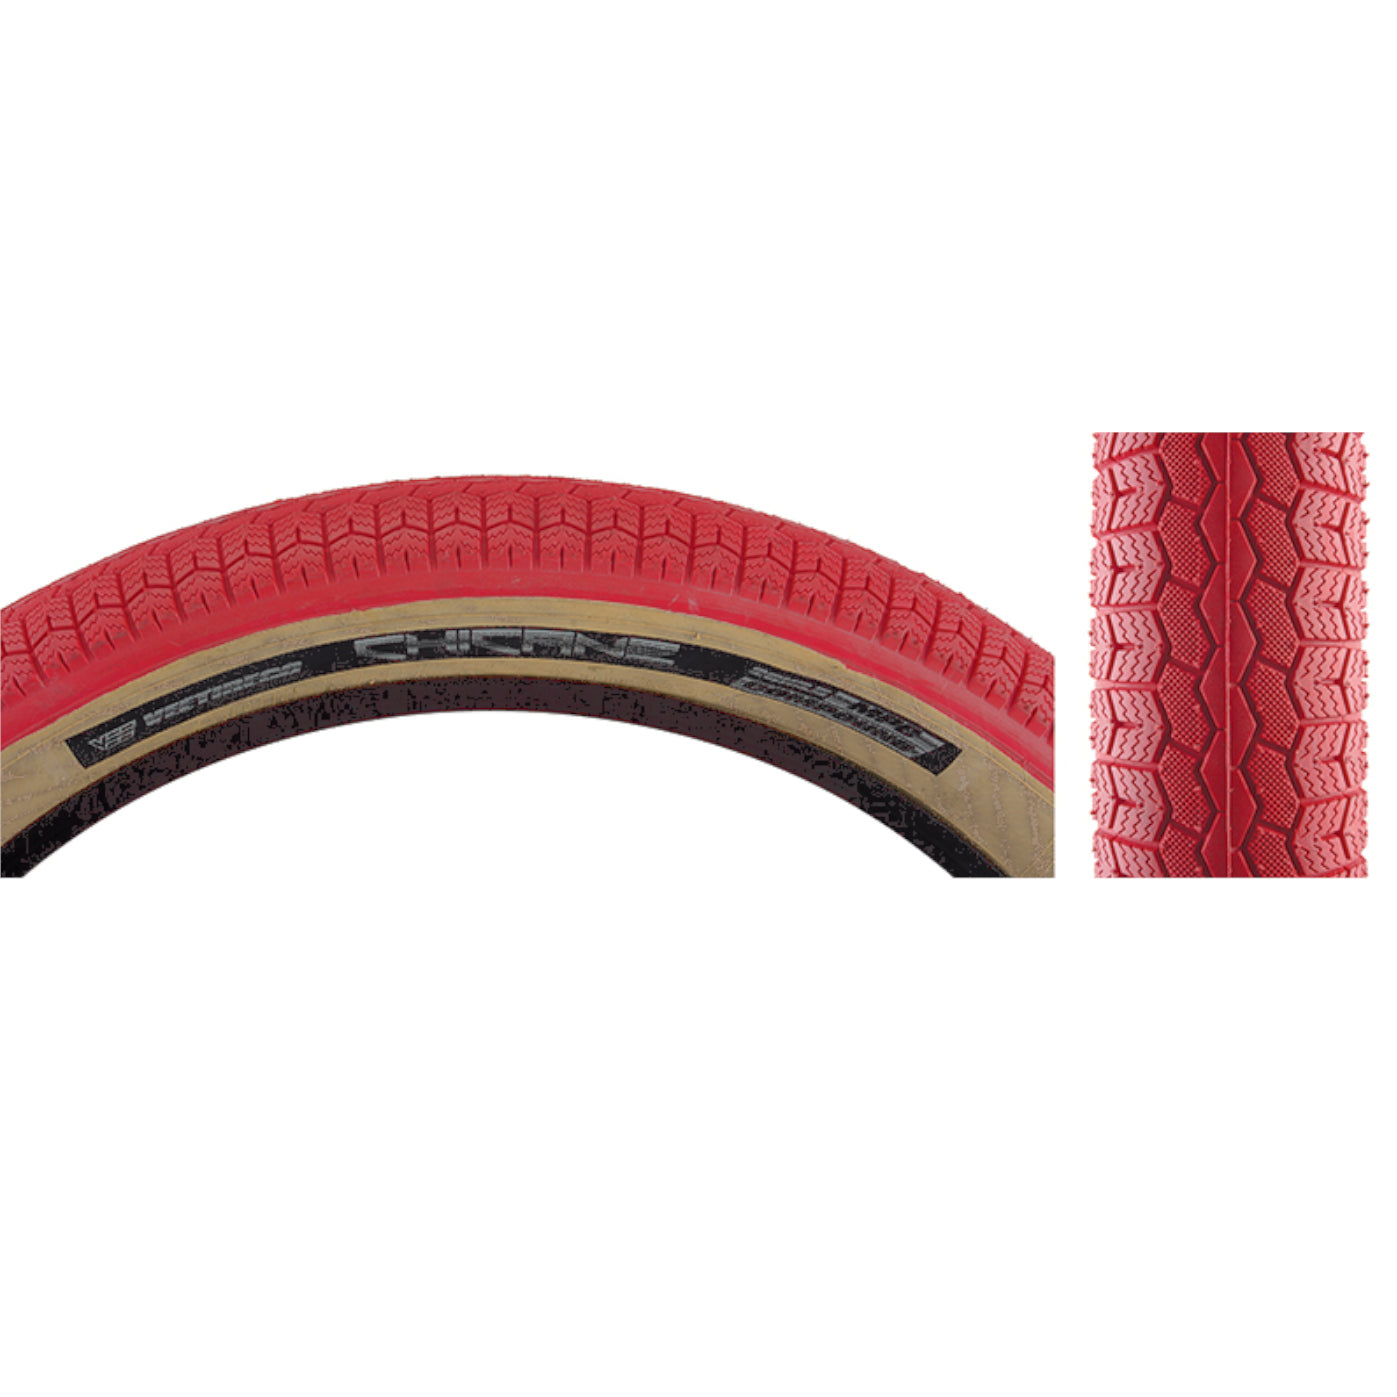 Buy red SE BIKES Chicane 26x3.50 Tire